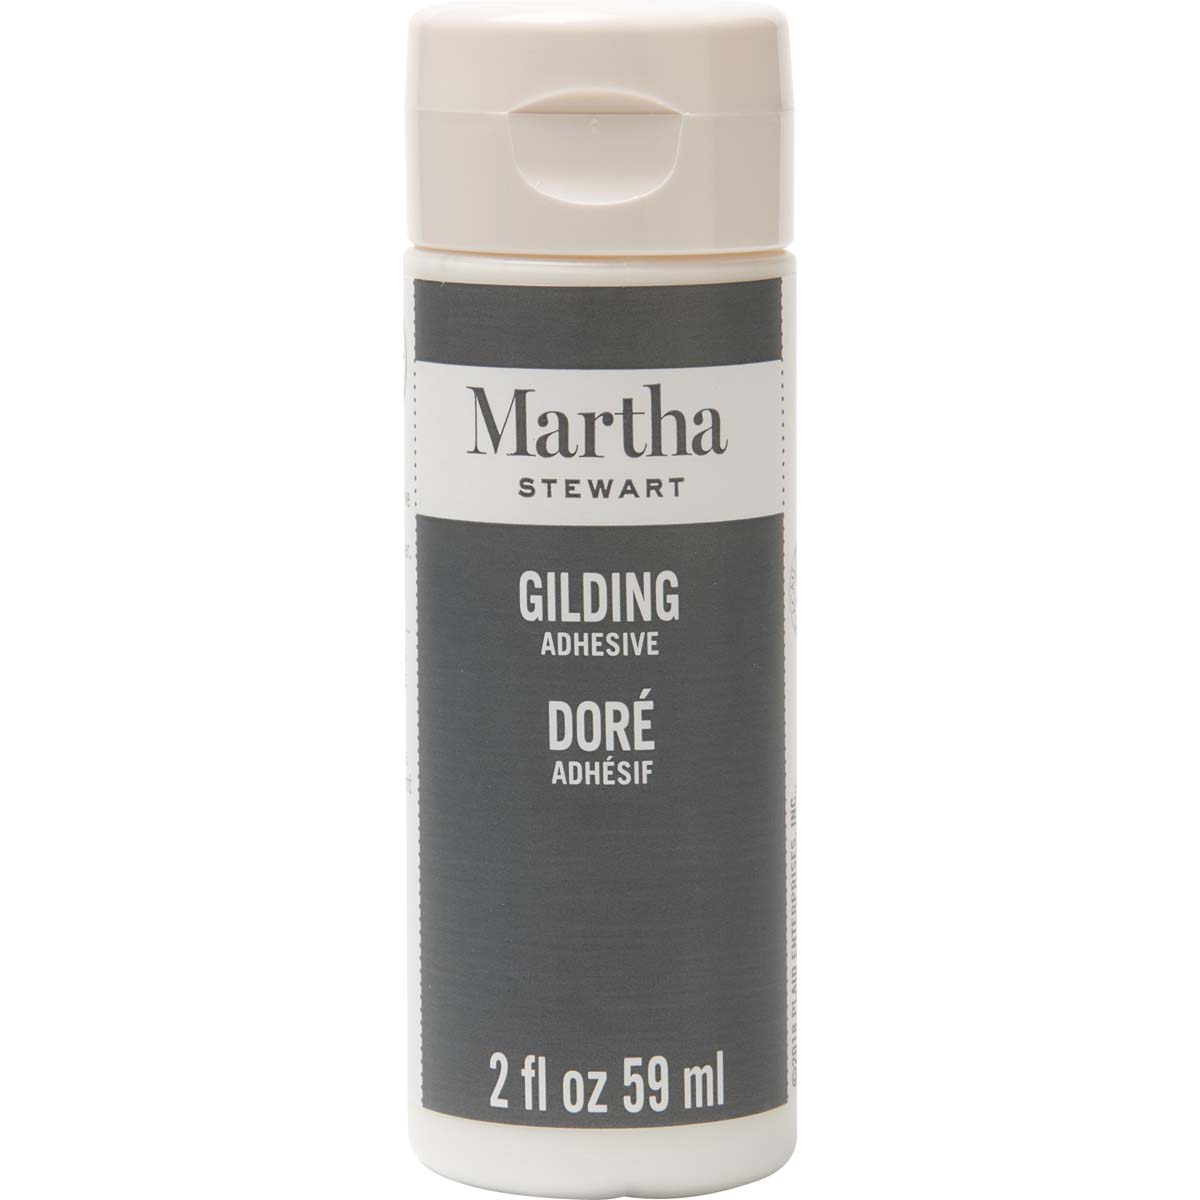 Martha Stewart • Gilding adhesive